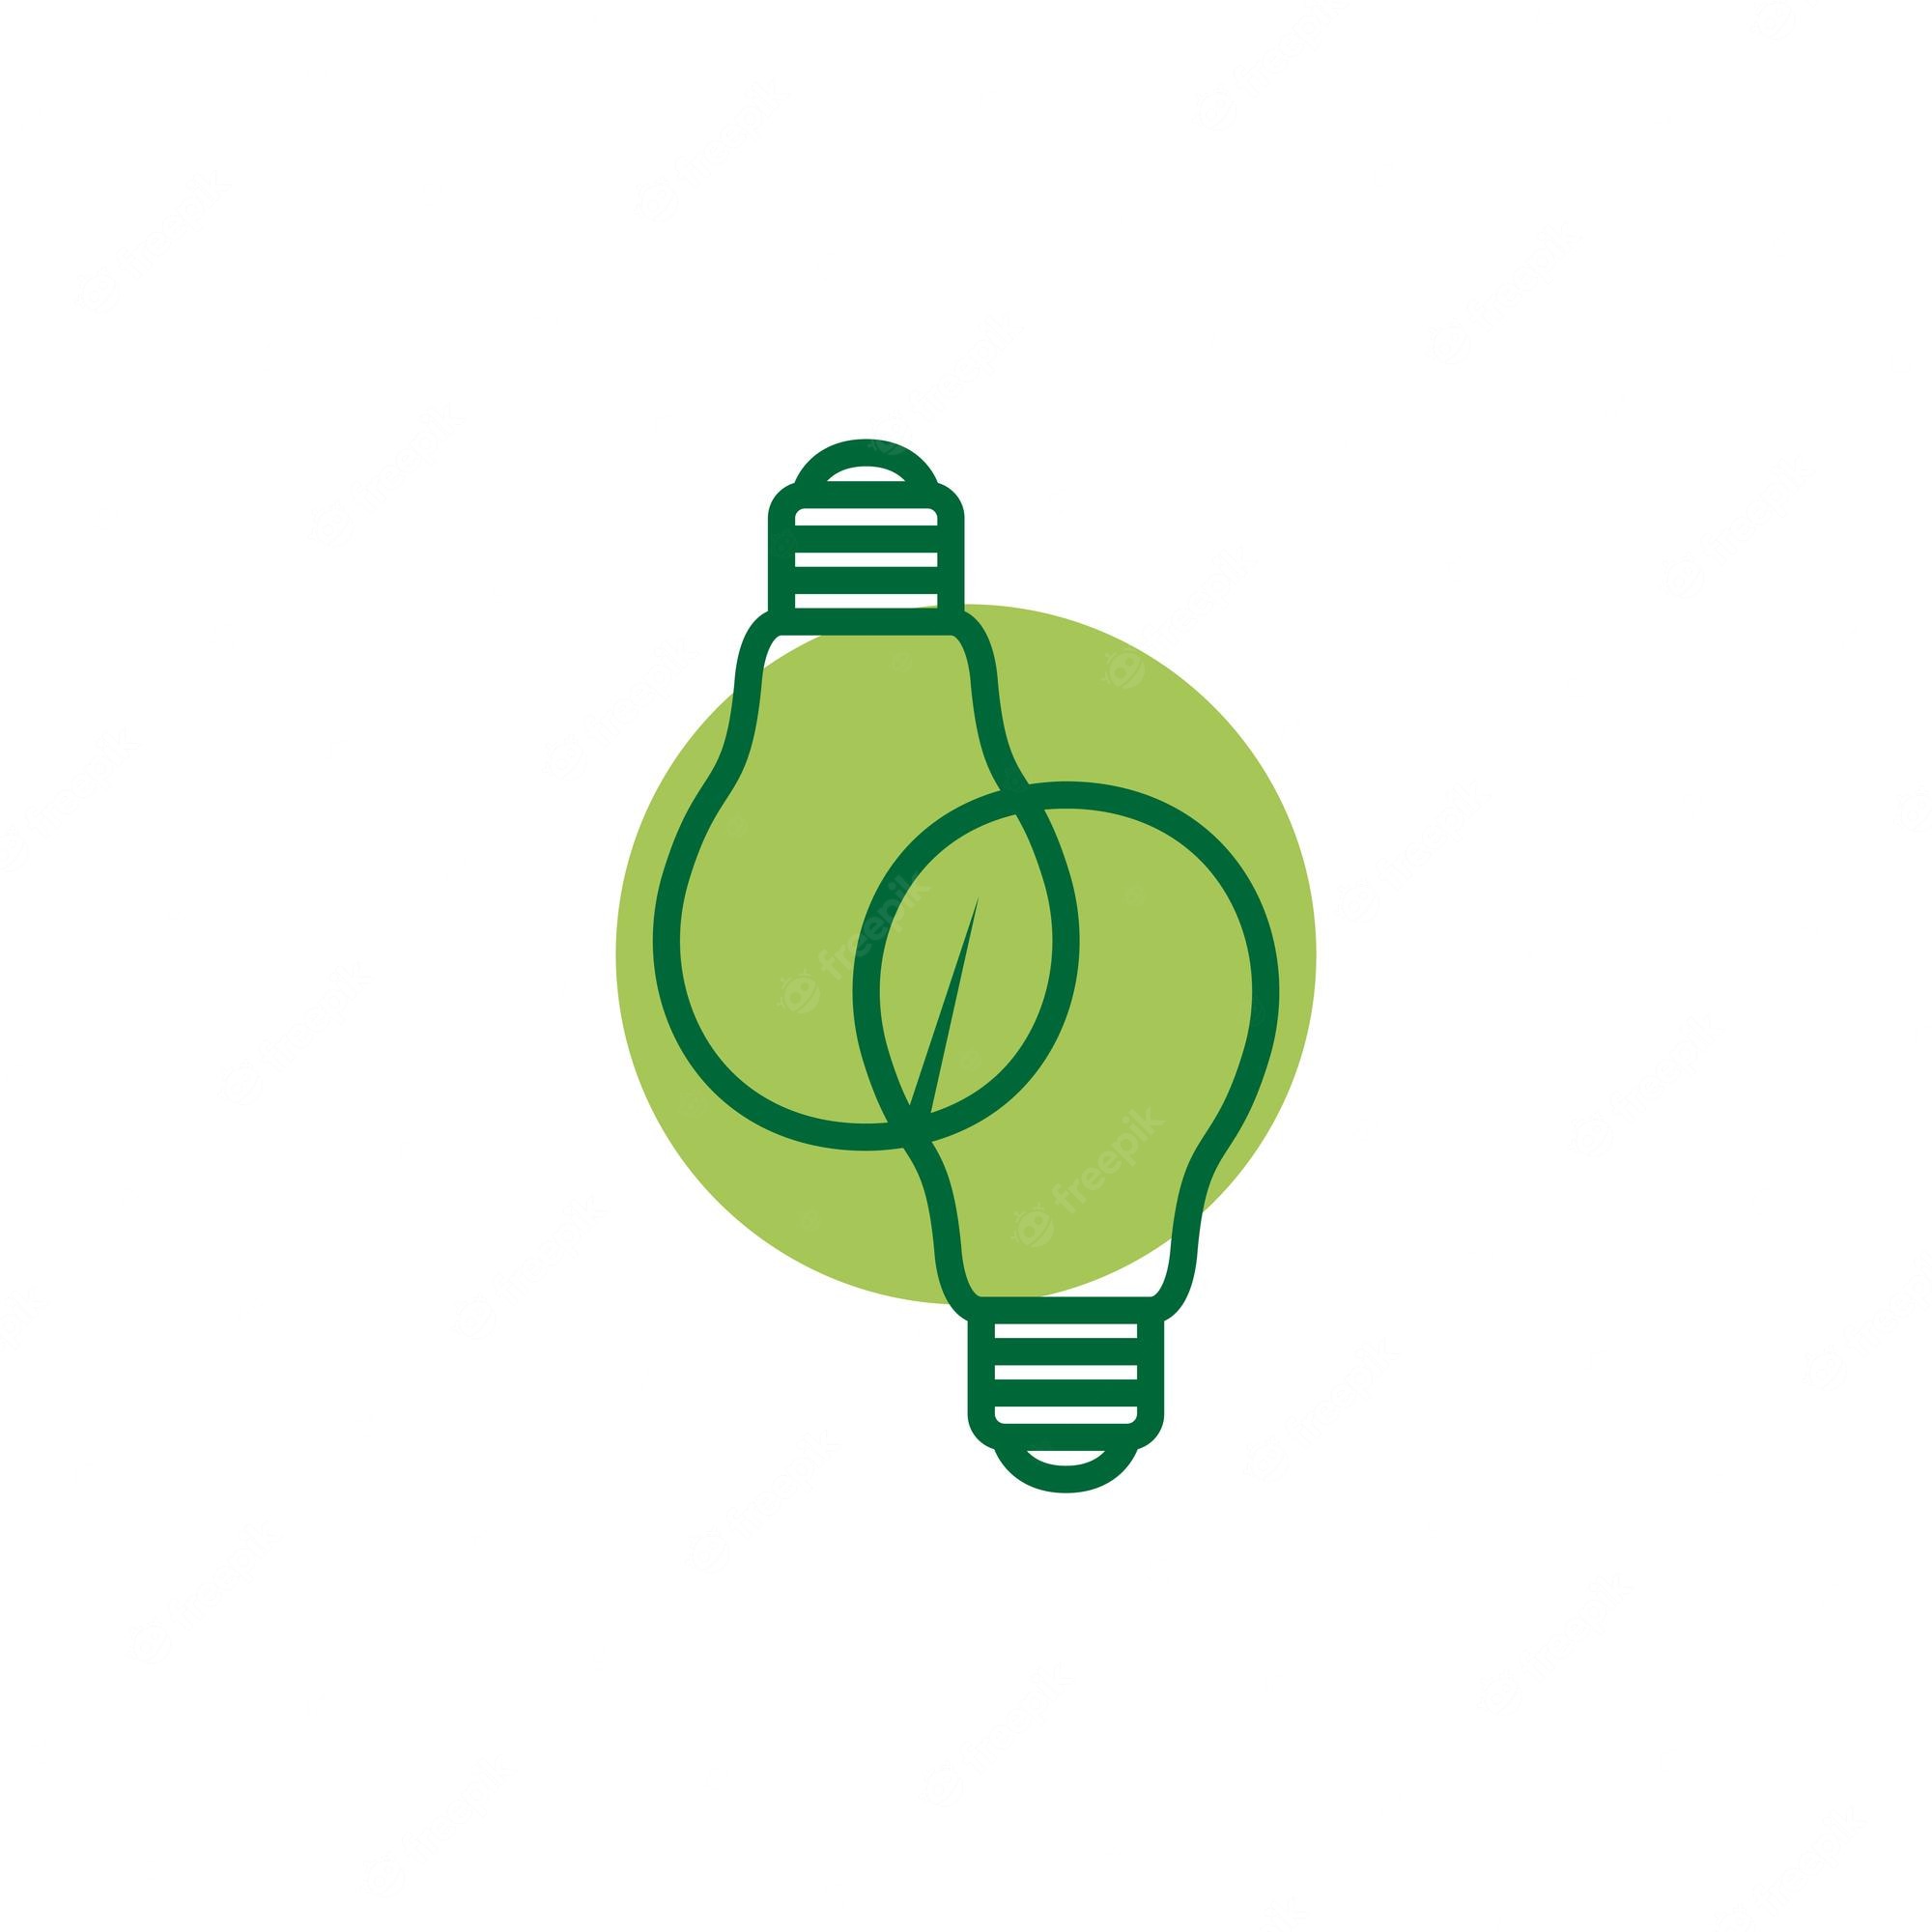 leaf-with-lamp-ideas-logo-design-vector-graphic-symbol-icon-sign-illustration-creative-idea_15473-8745.jpg